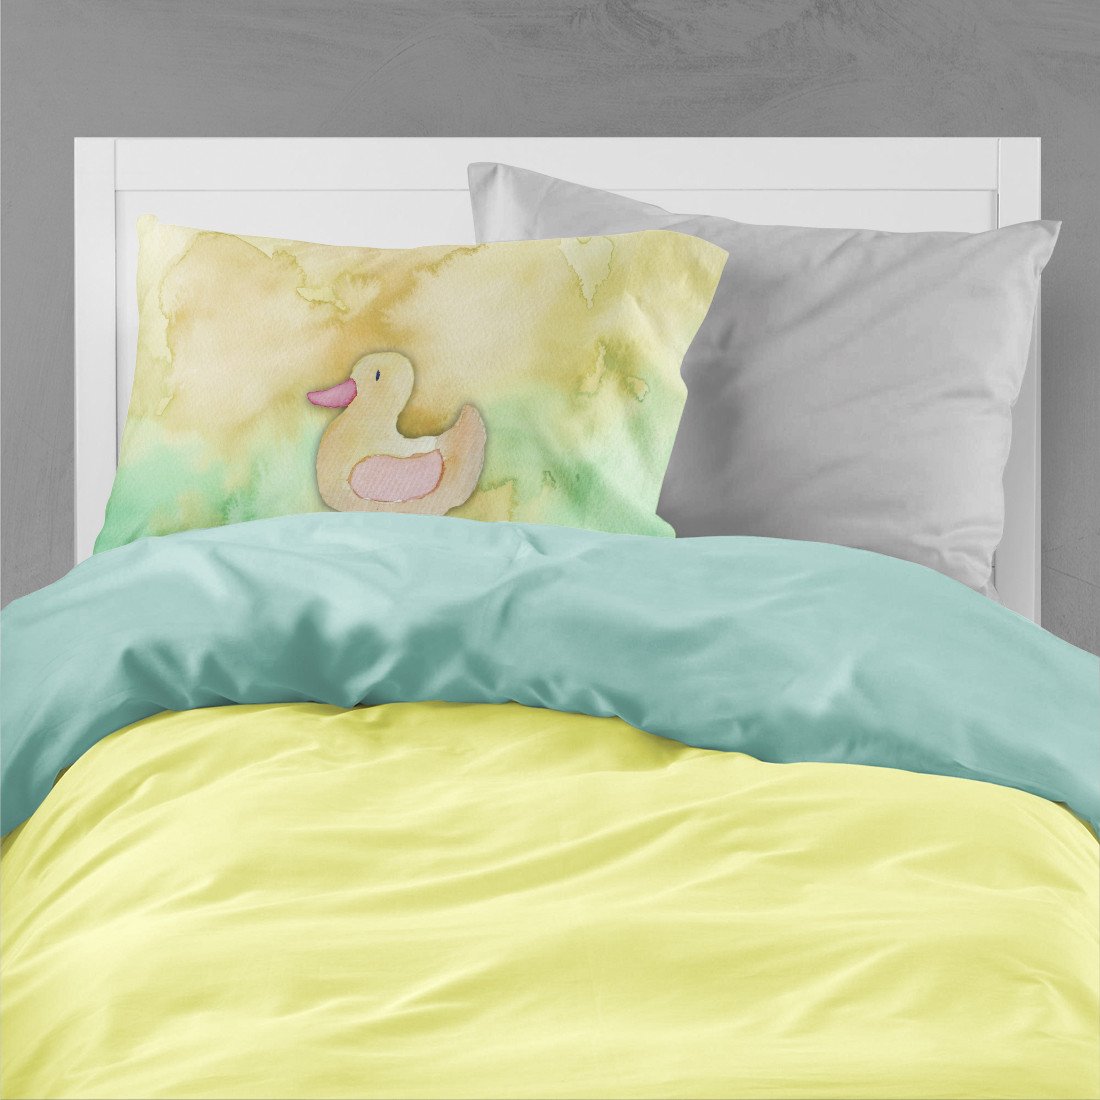 Rubber Duckie Watercolor Fabric Standard Pillowcase BB7351PILLOWCASE by Caroline's Treasures